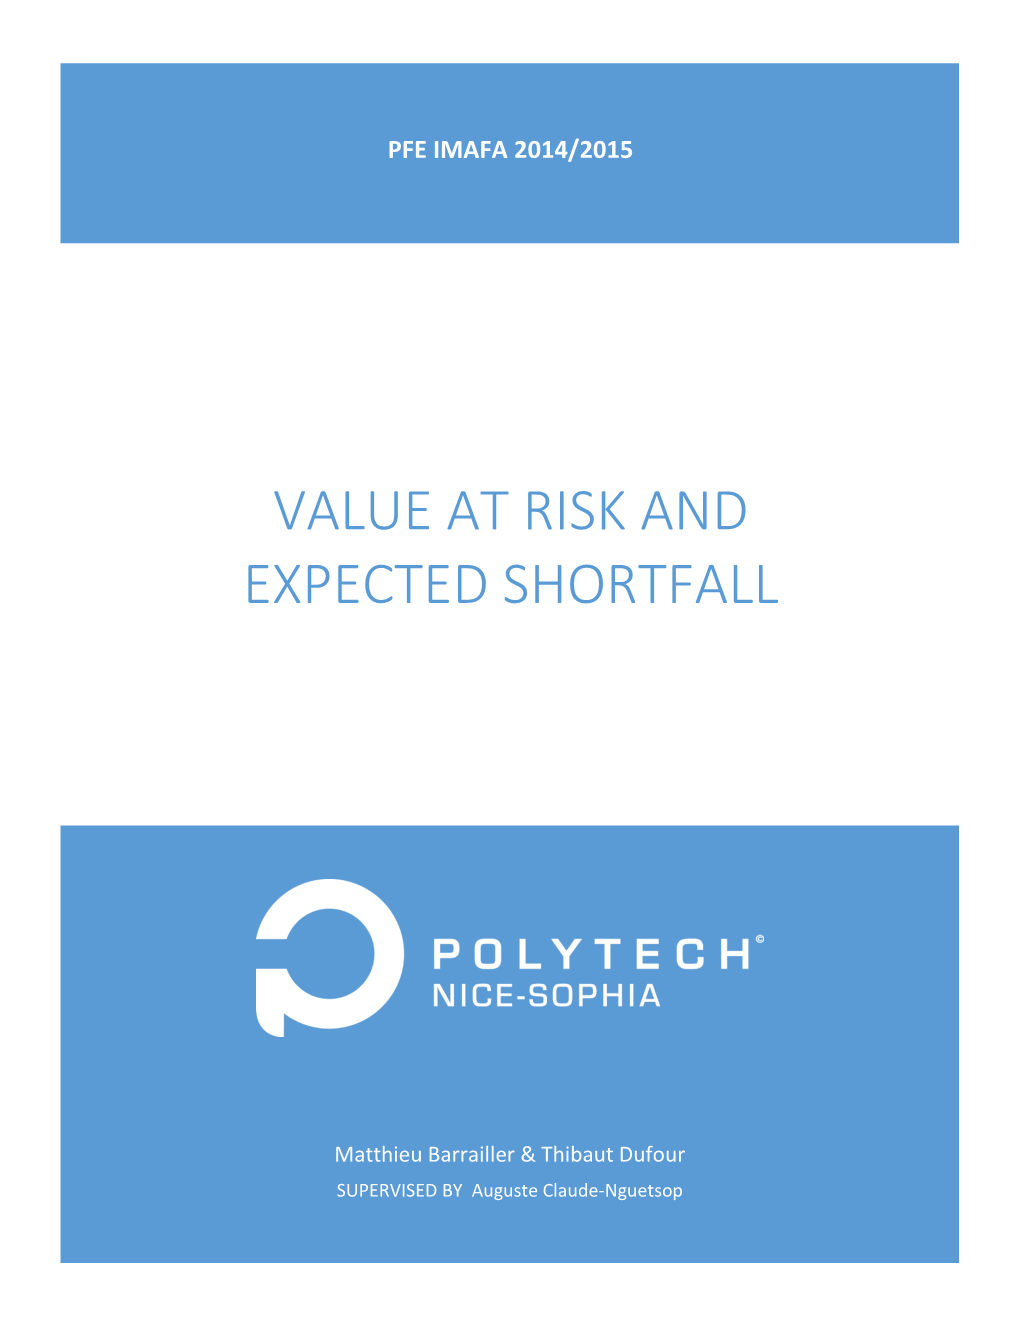 Value at Risk and Expected Shortfall